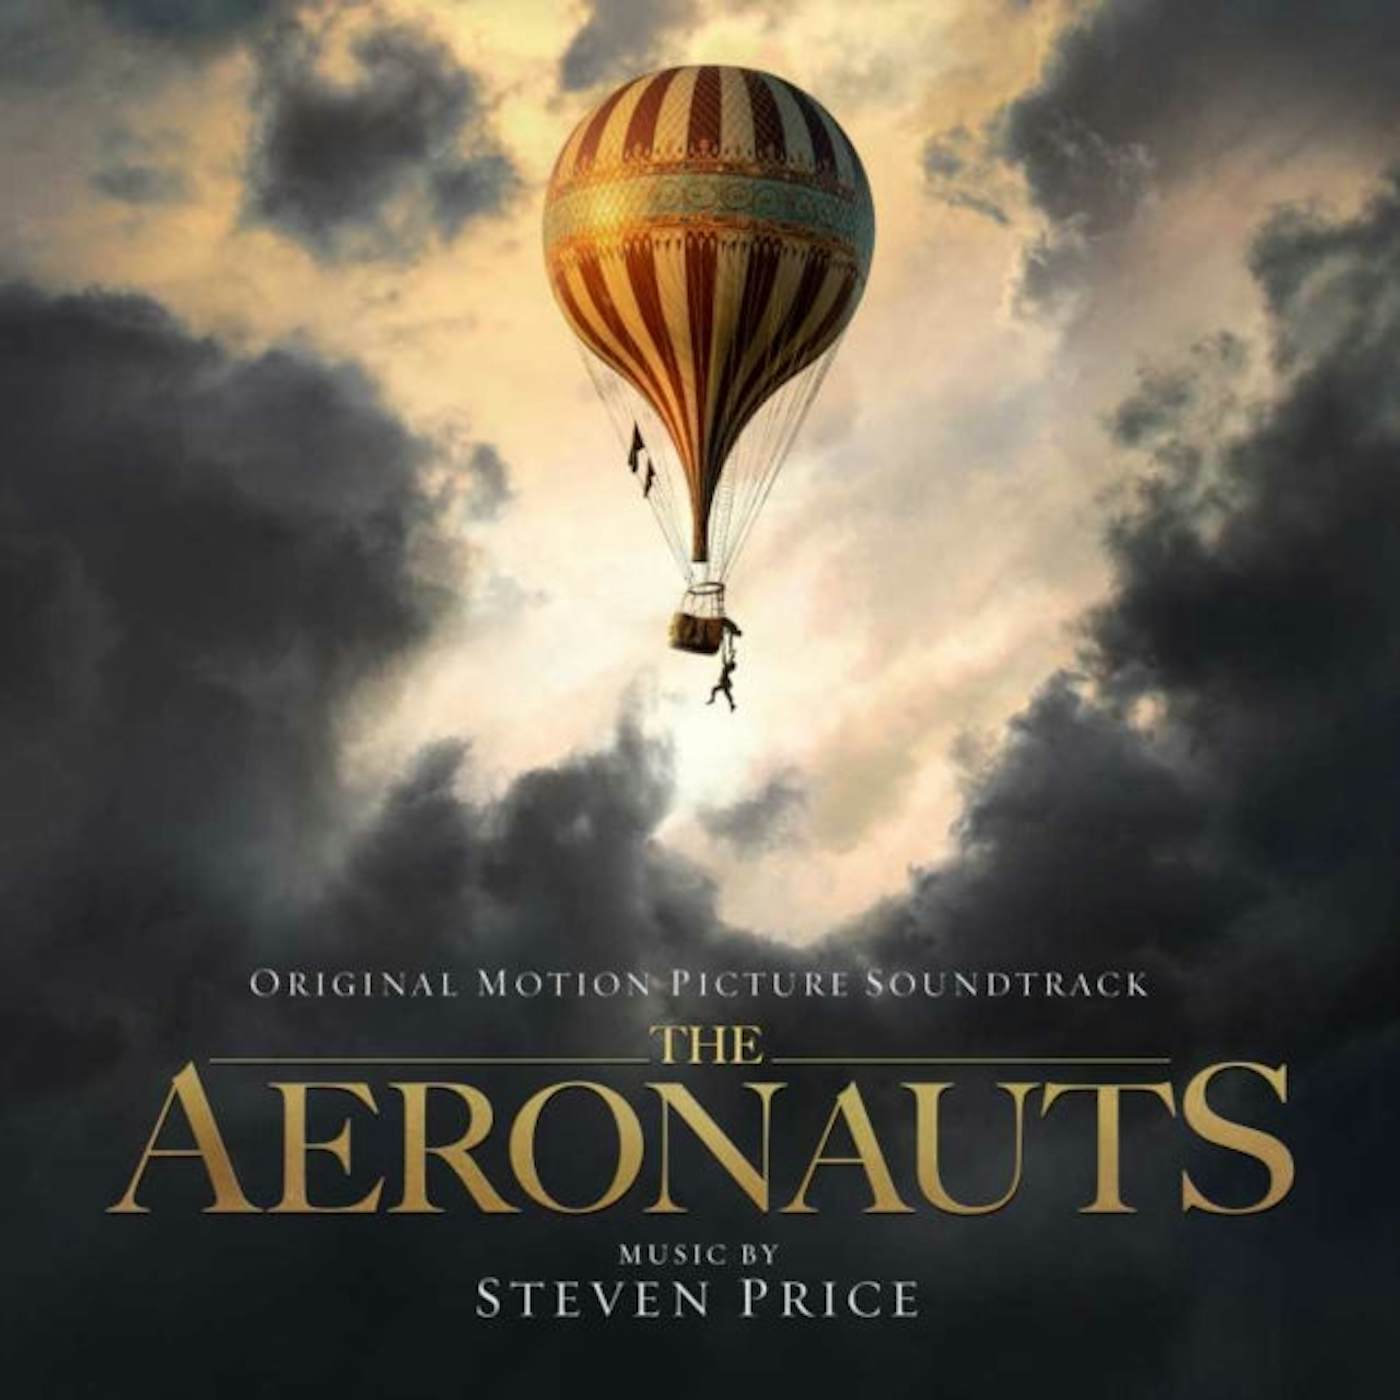 Steven Price LP Vinyl Record - The Aeronauts